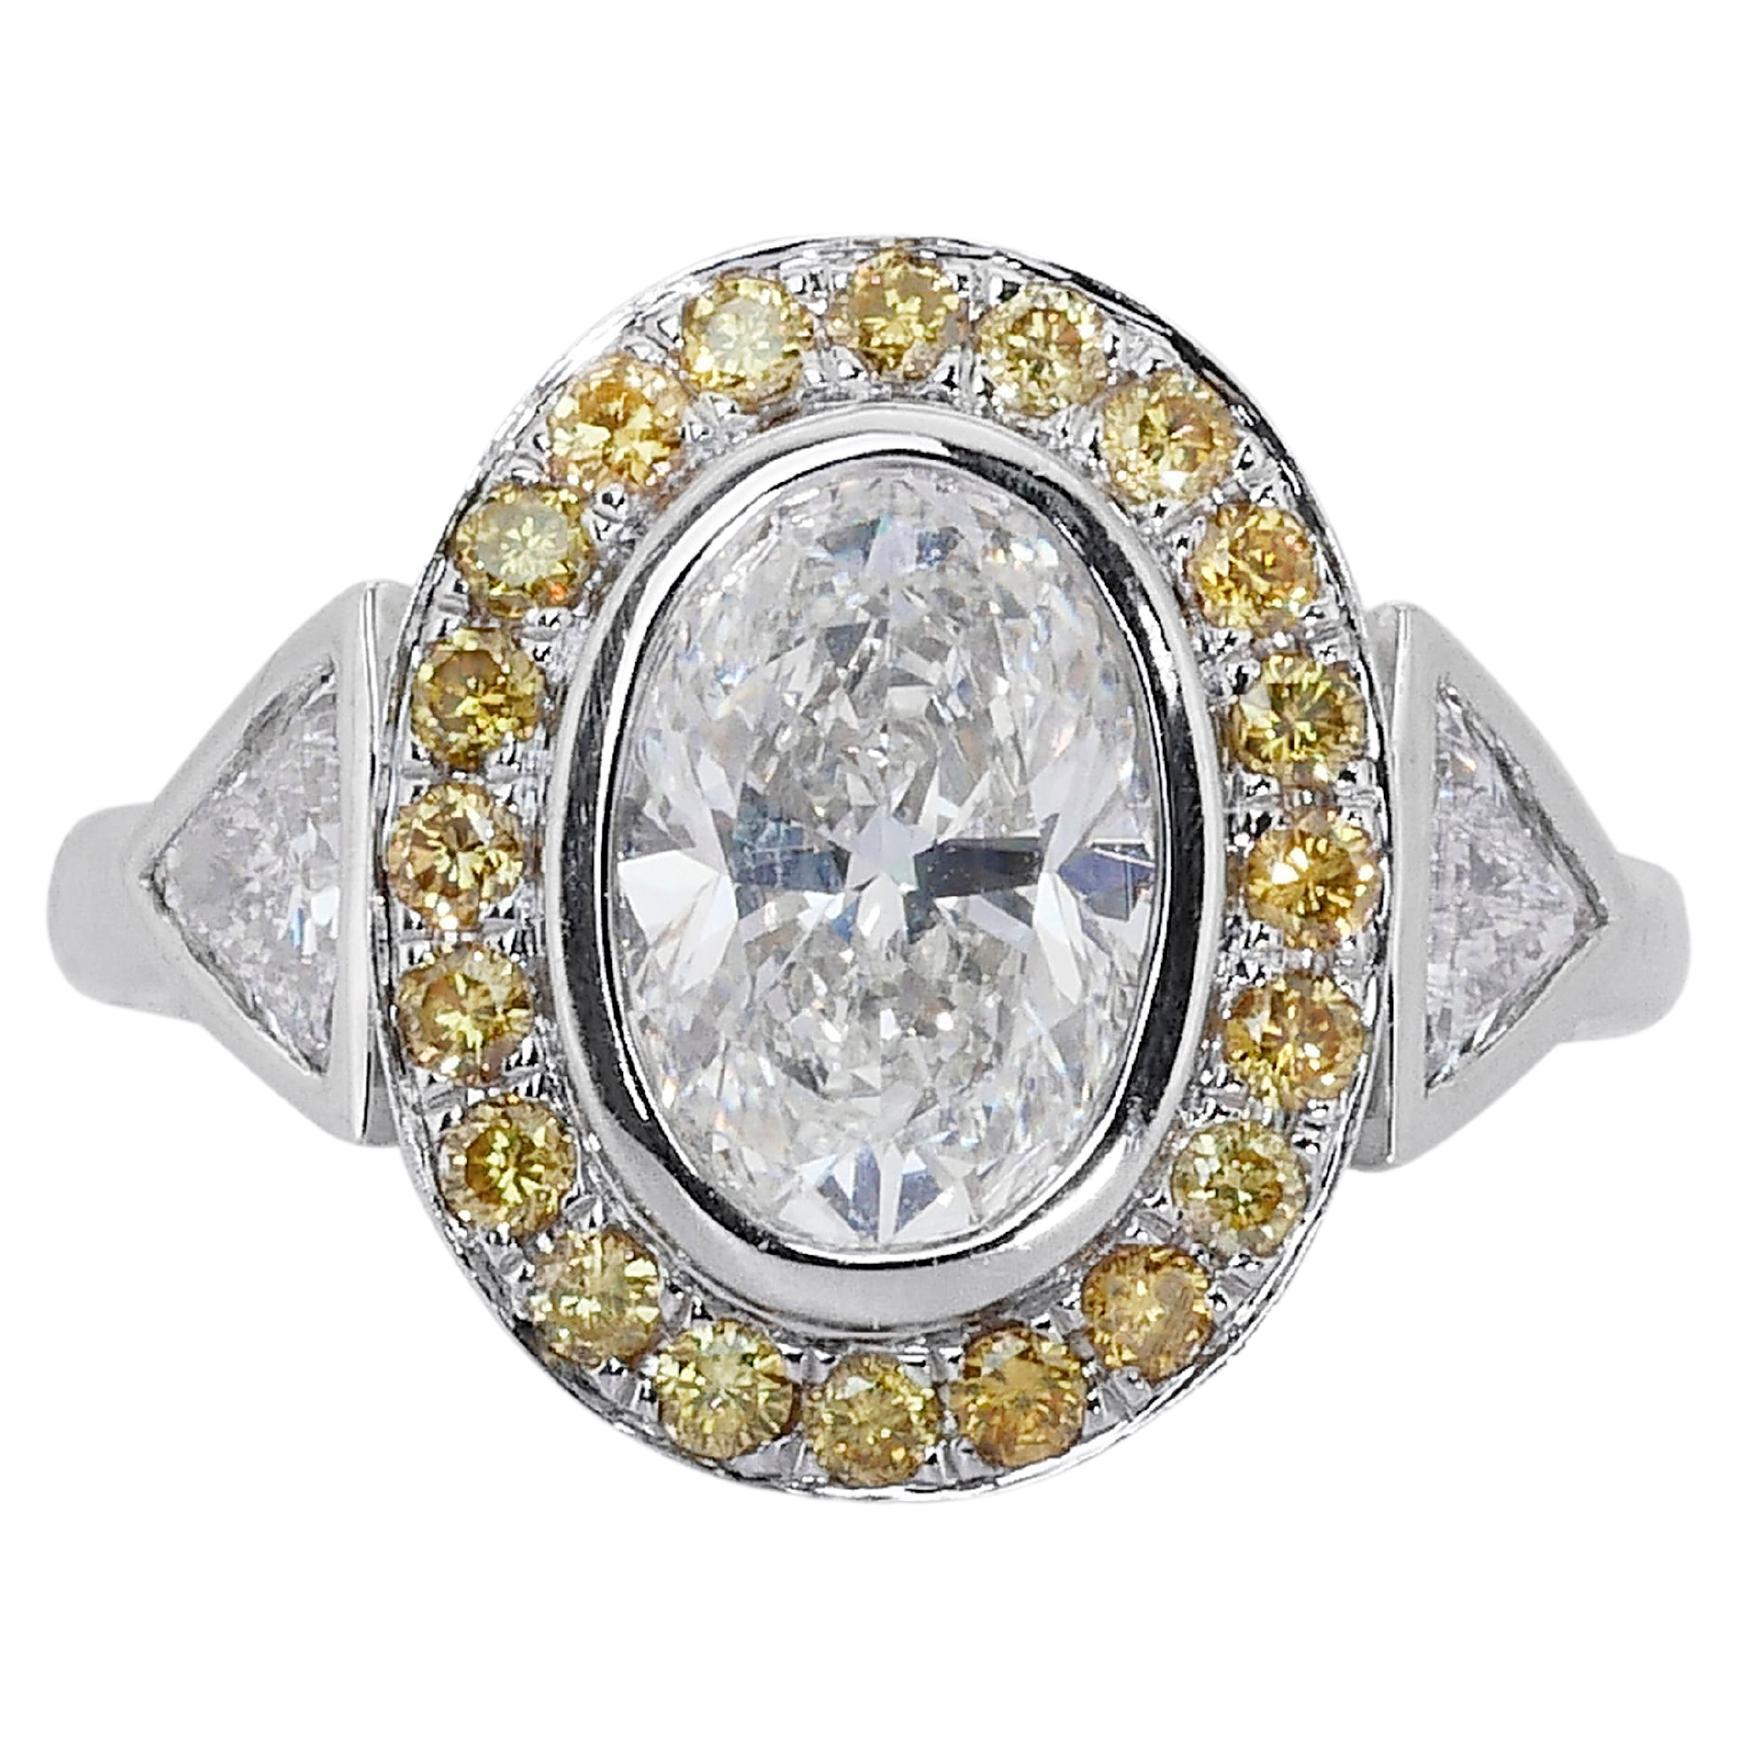 Ravishing 18k White Gold Oval Ring w/ 1.90ct Natural Diamonds IGI Certificate For Sale